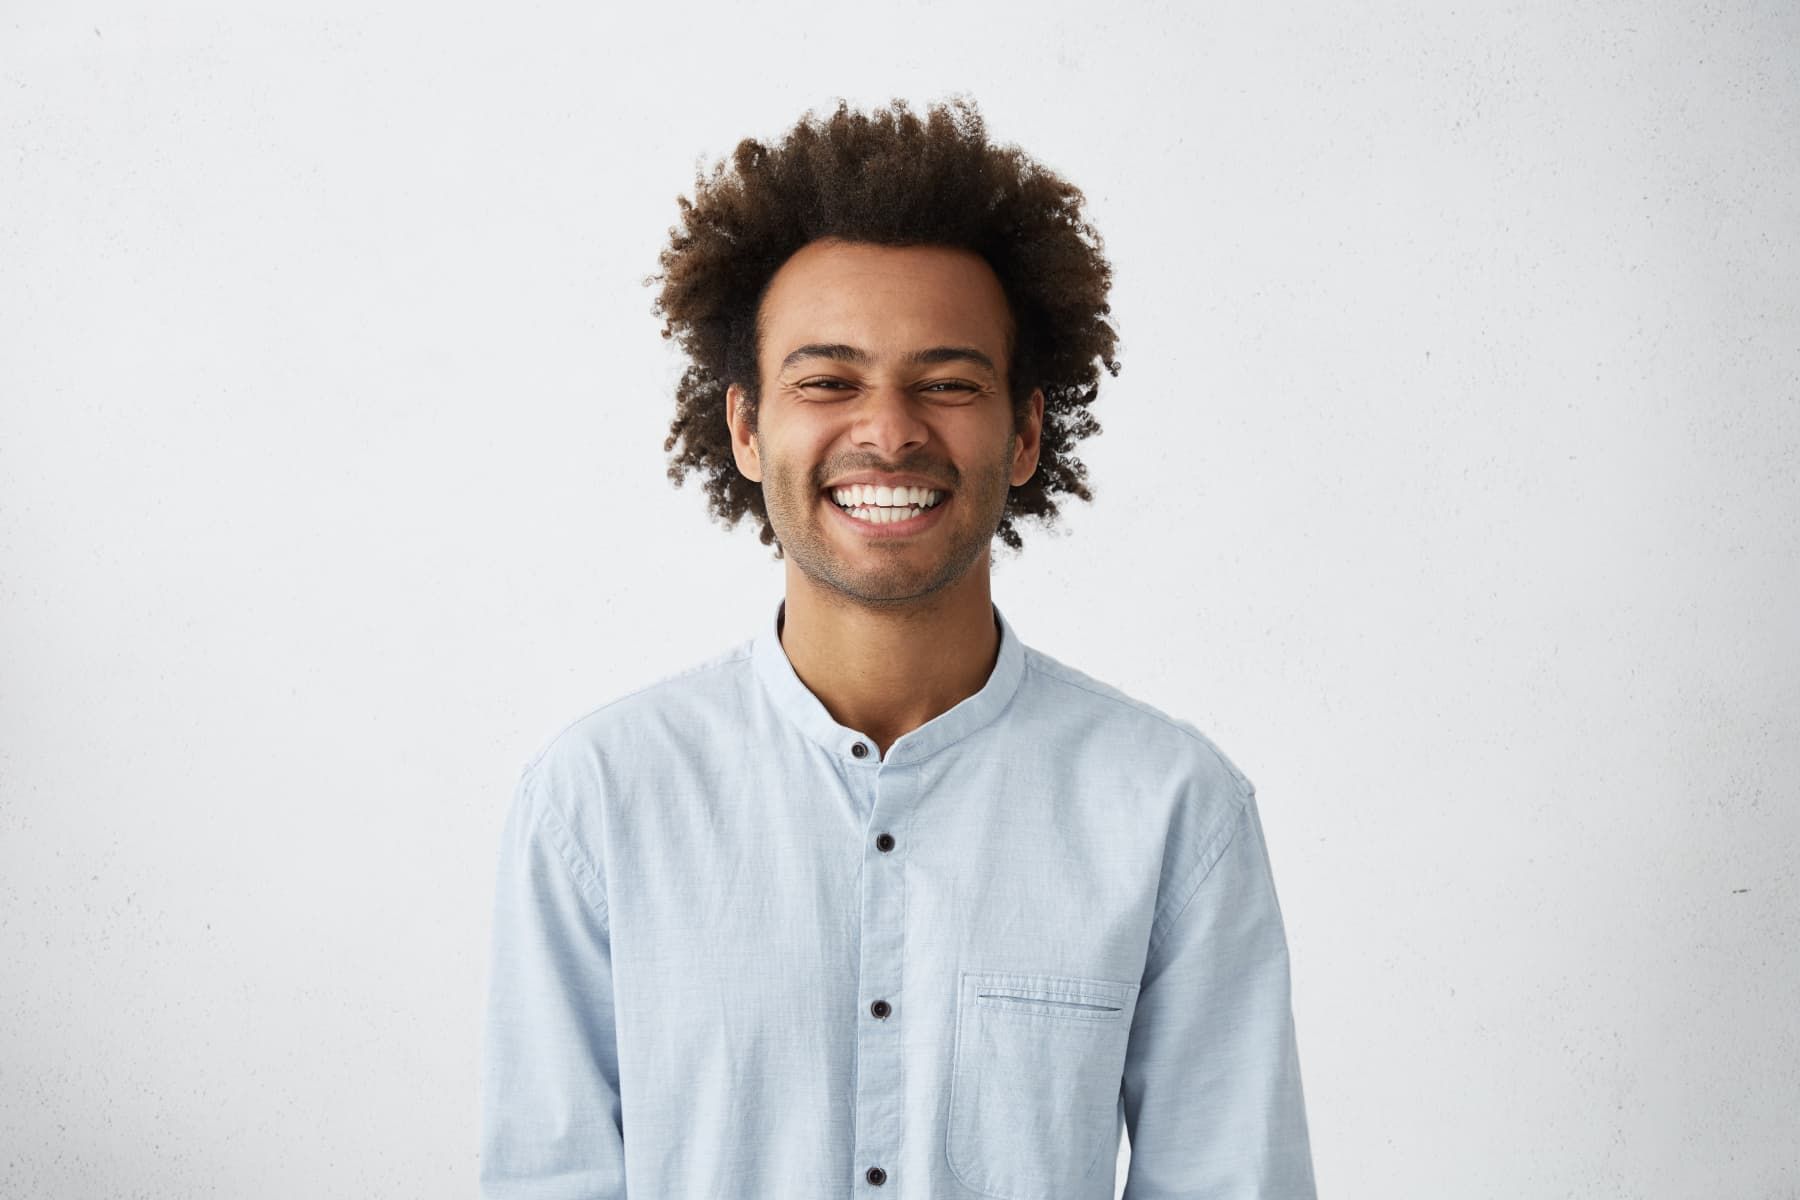 gentleman with a big grin wearing a long-sleeved shirt